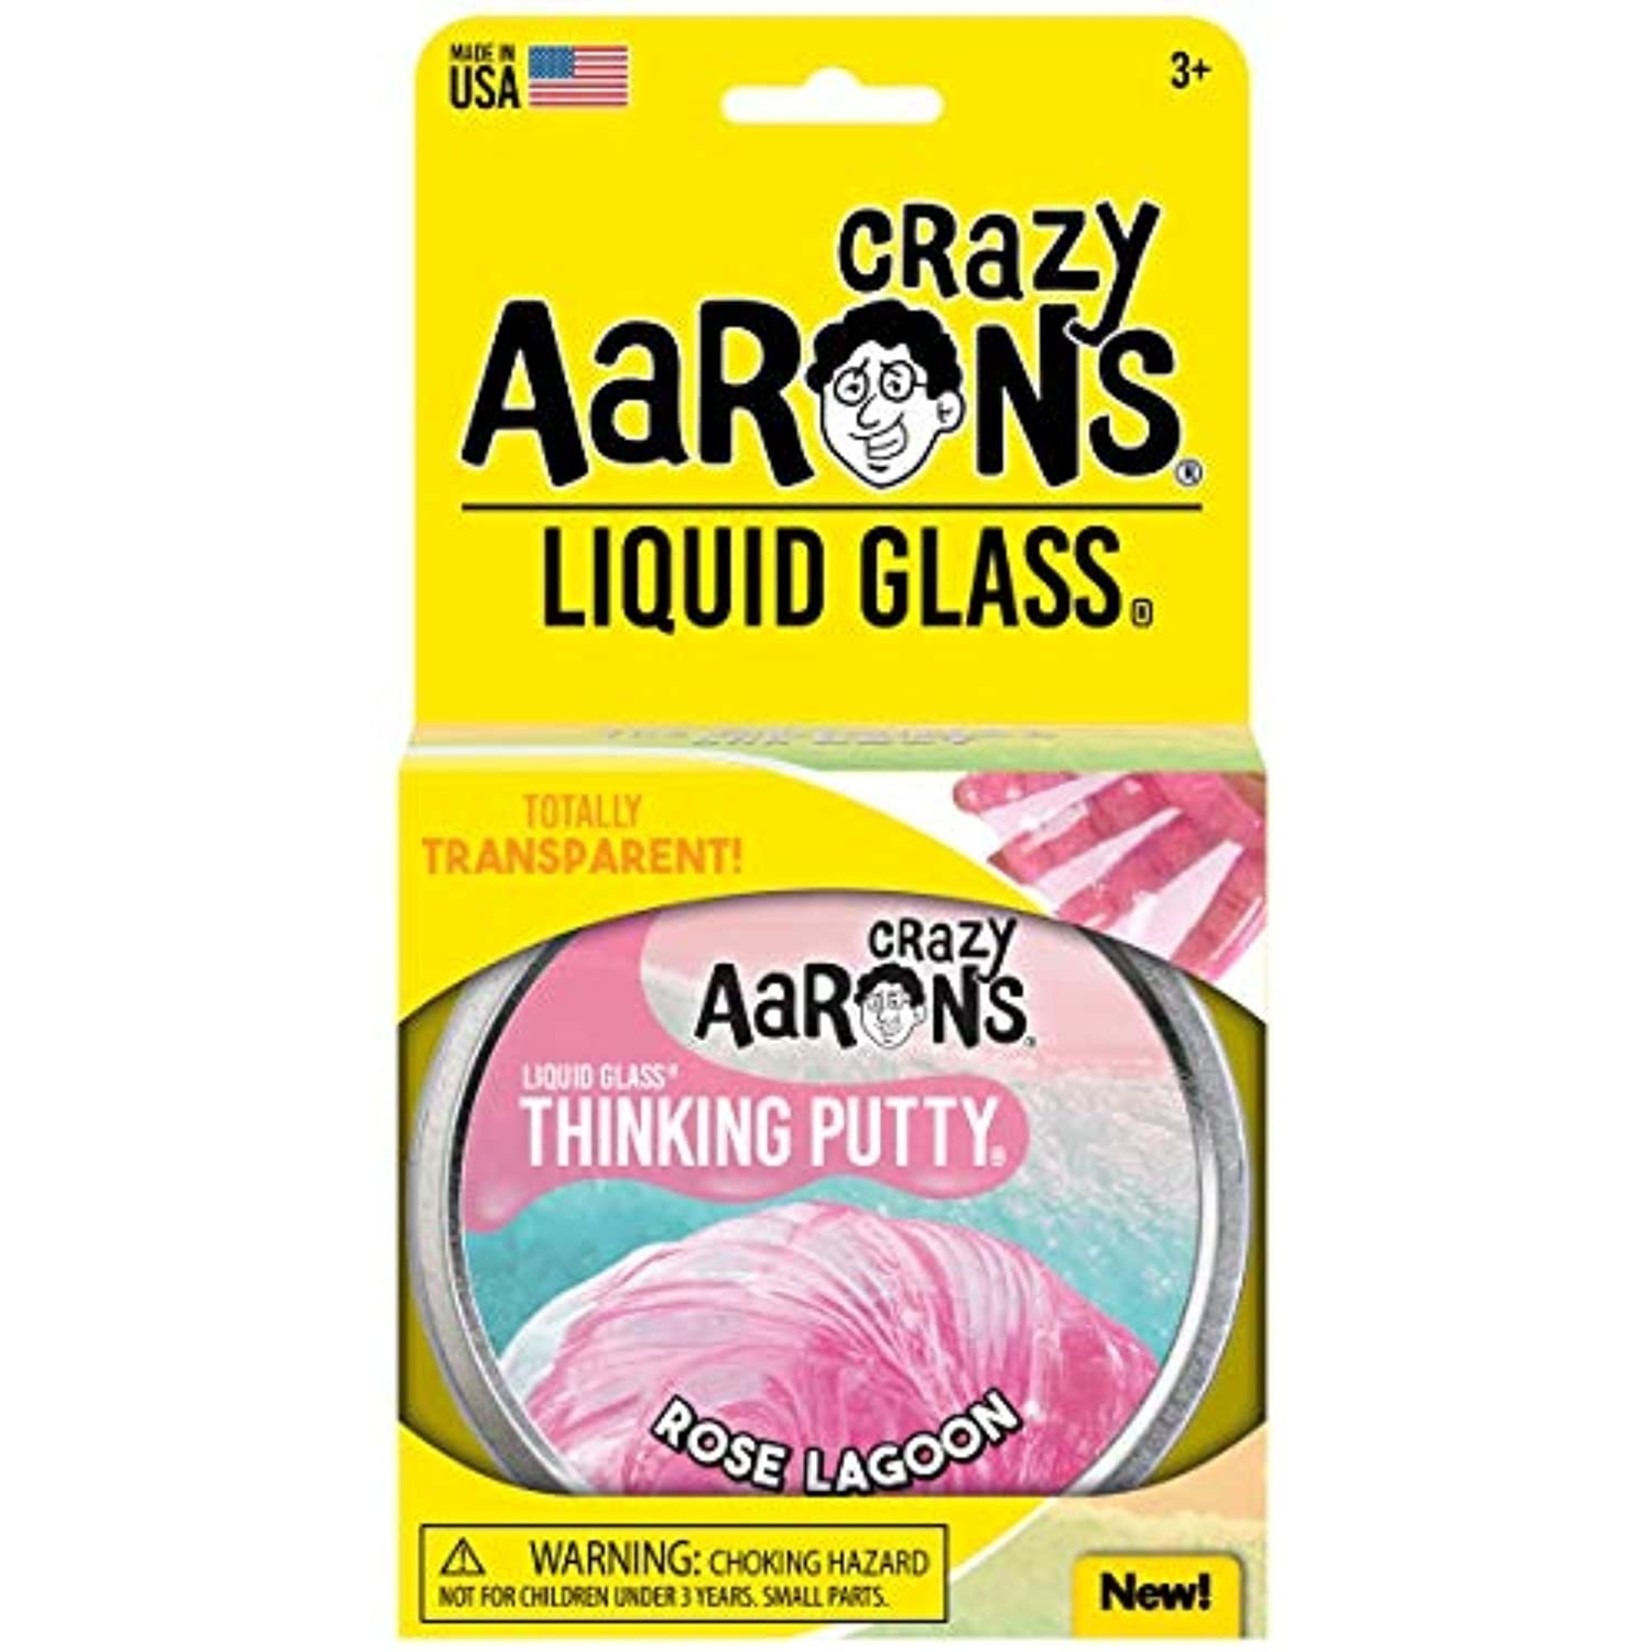 Crazy Aaron's Crazy Aaron's Rose Lagoon - Full Size 4" Thinking Putty Tin